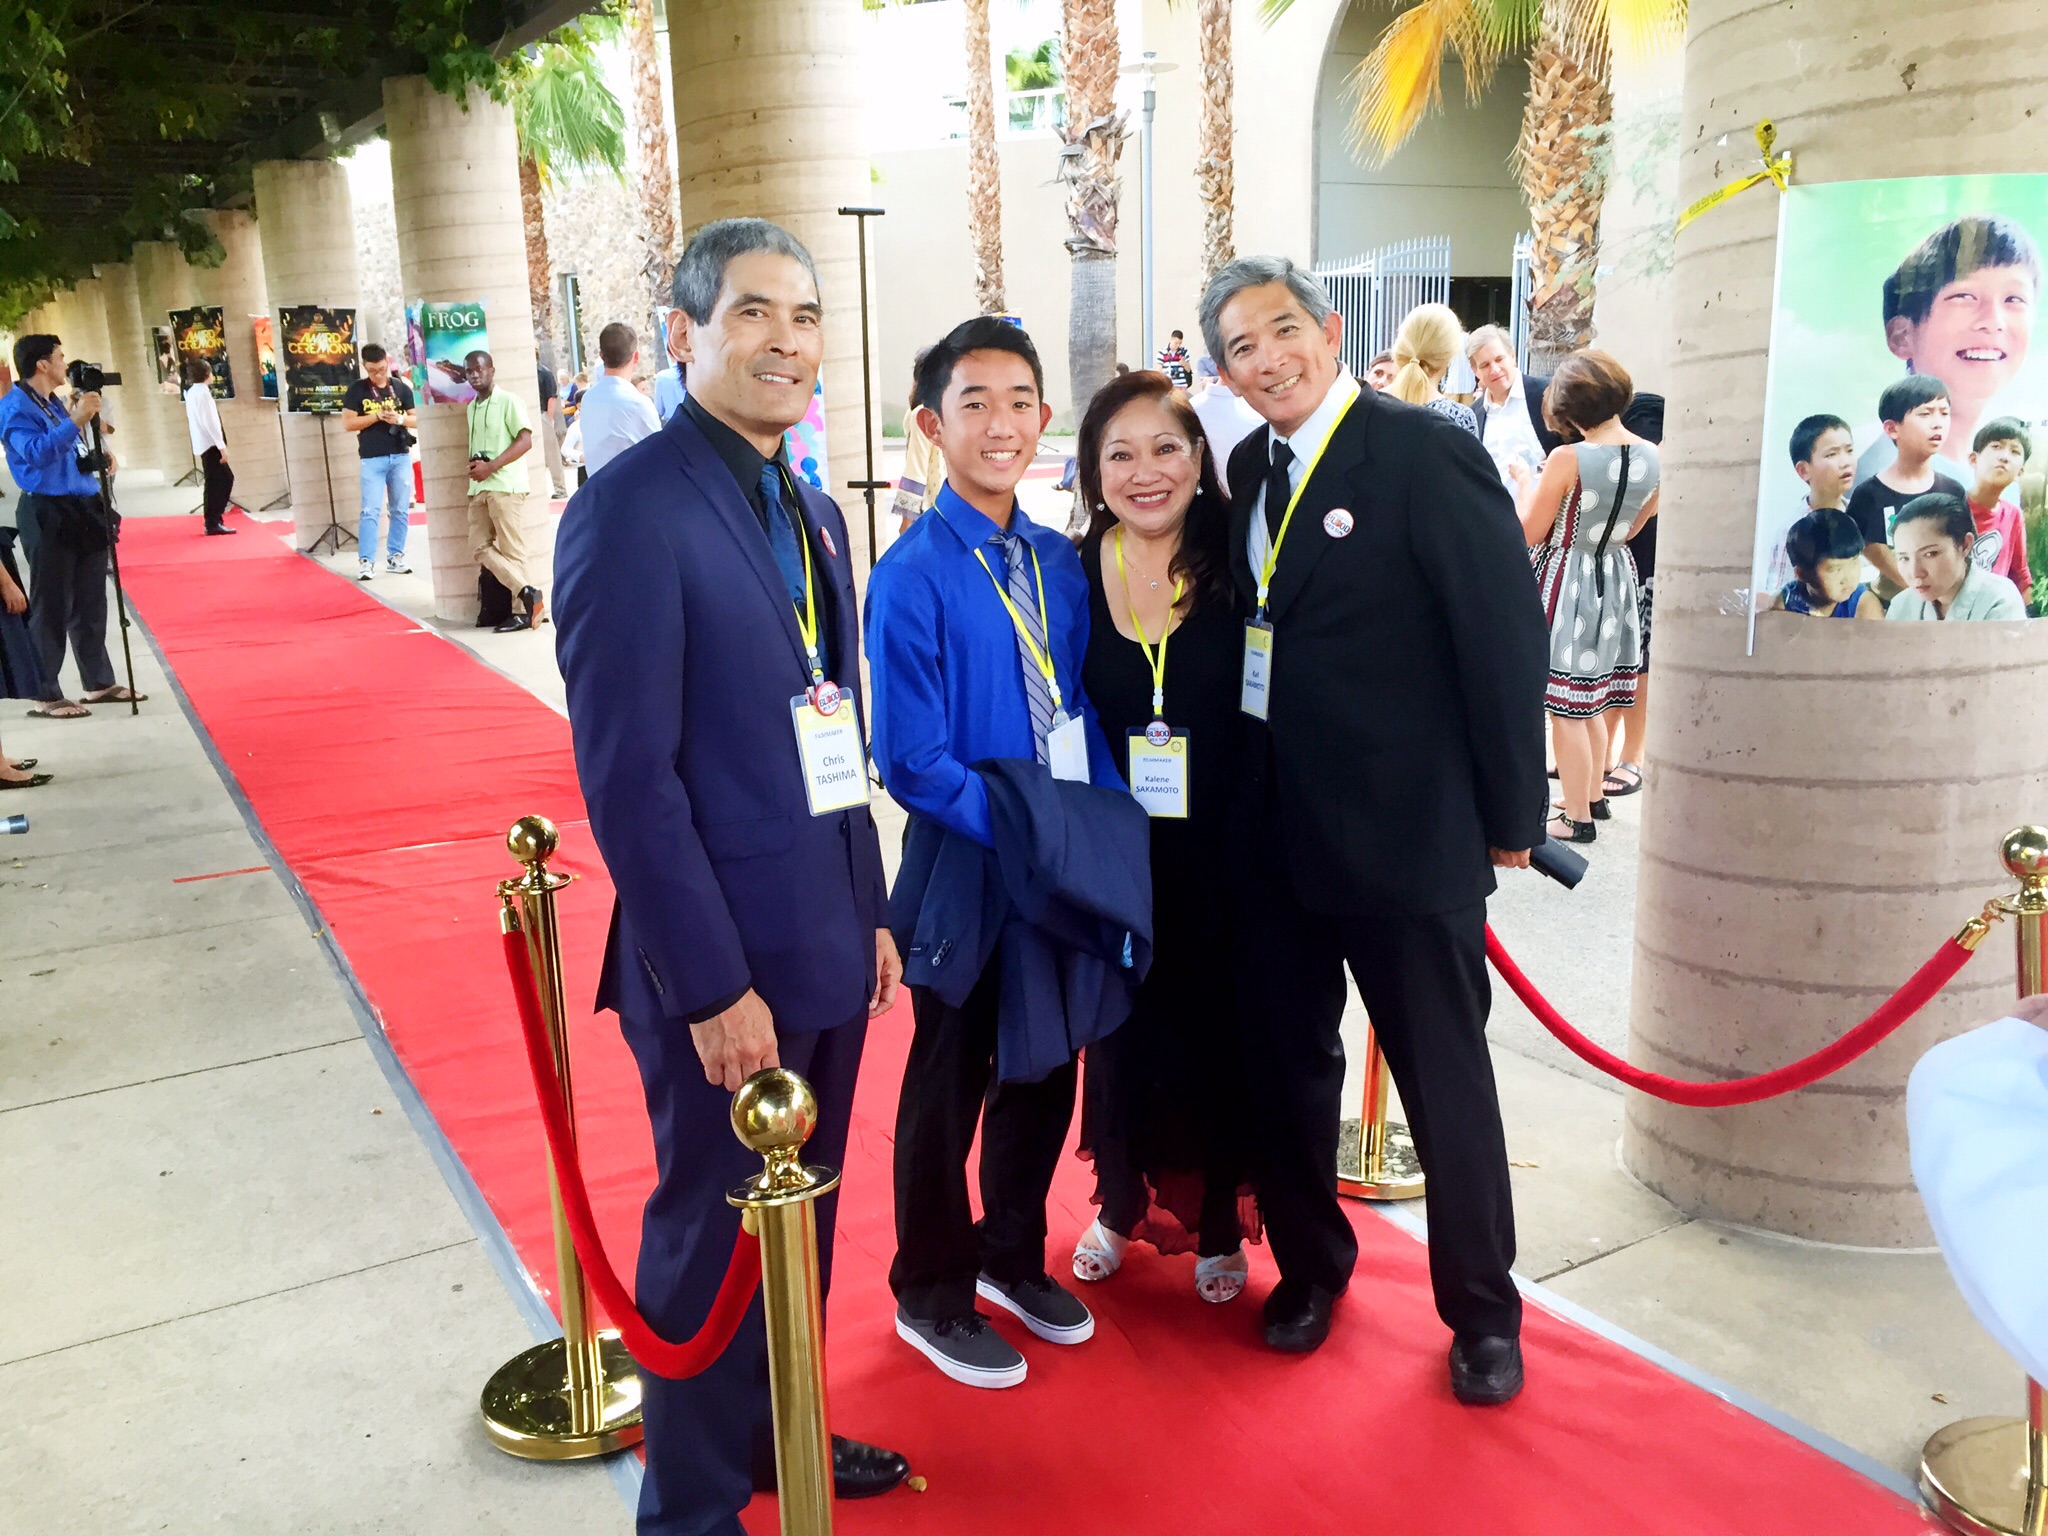 On the Red Carpet: San Diego International Kids' Film Festival Award Ceremony - Representing 